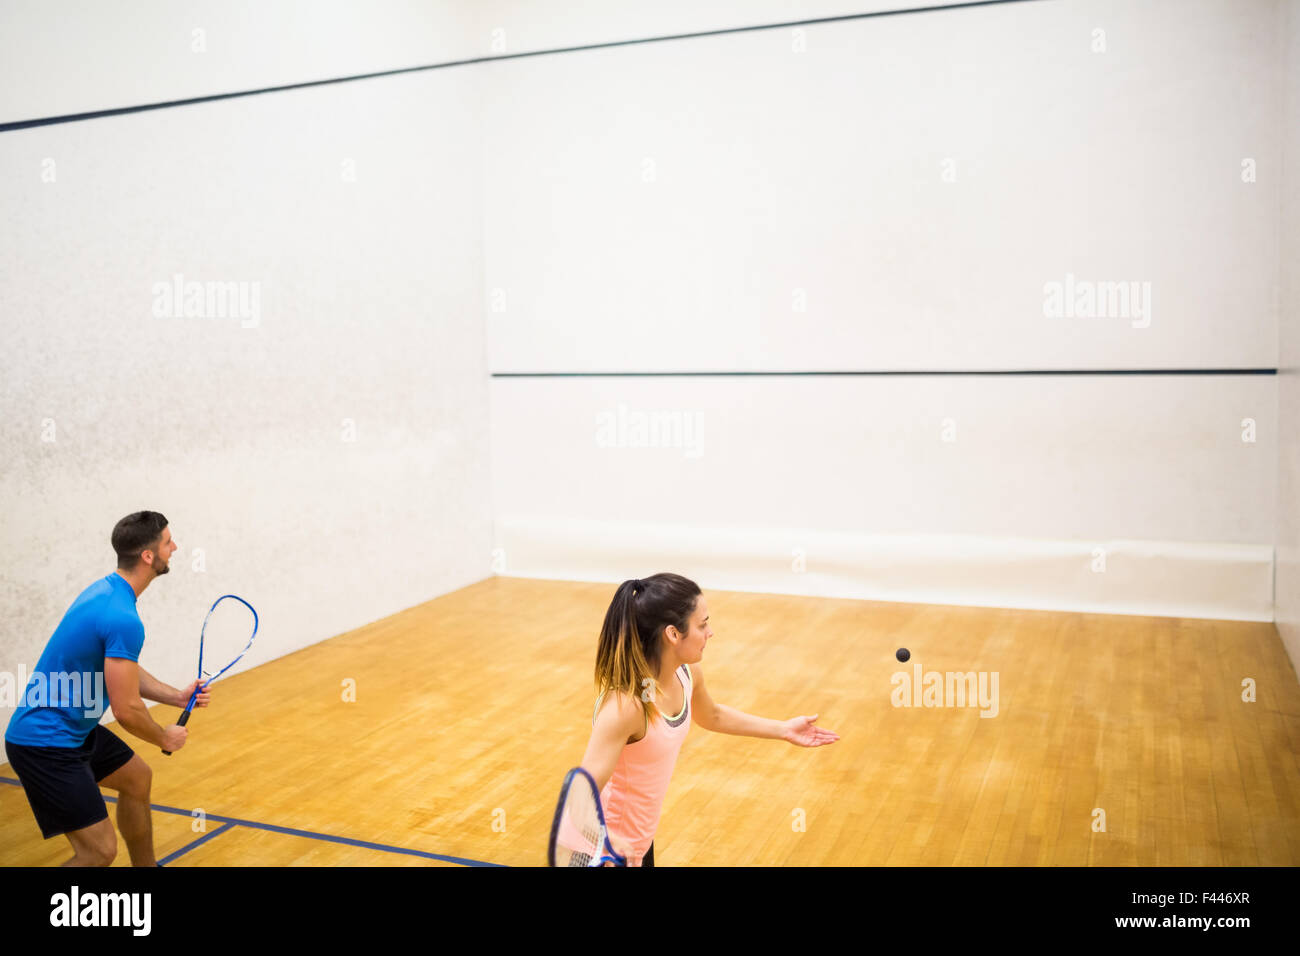 Pareja competitiva jugar squash juntos Foto de stock